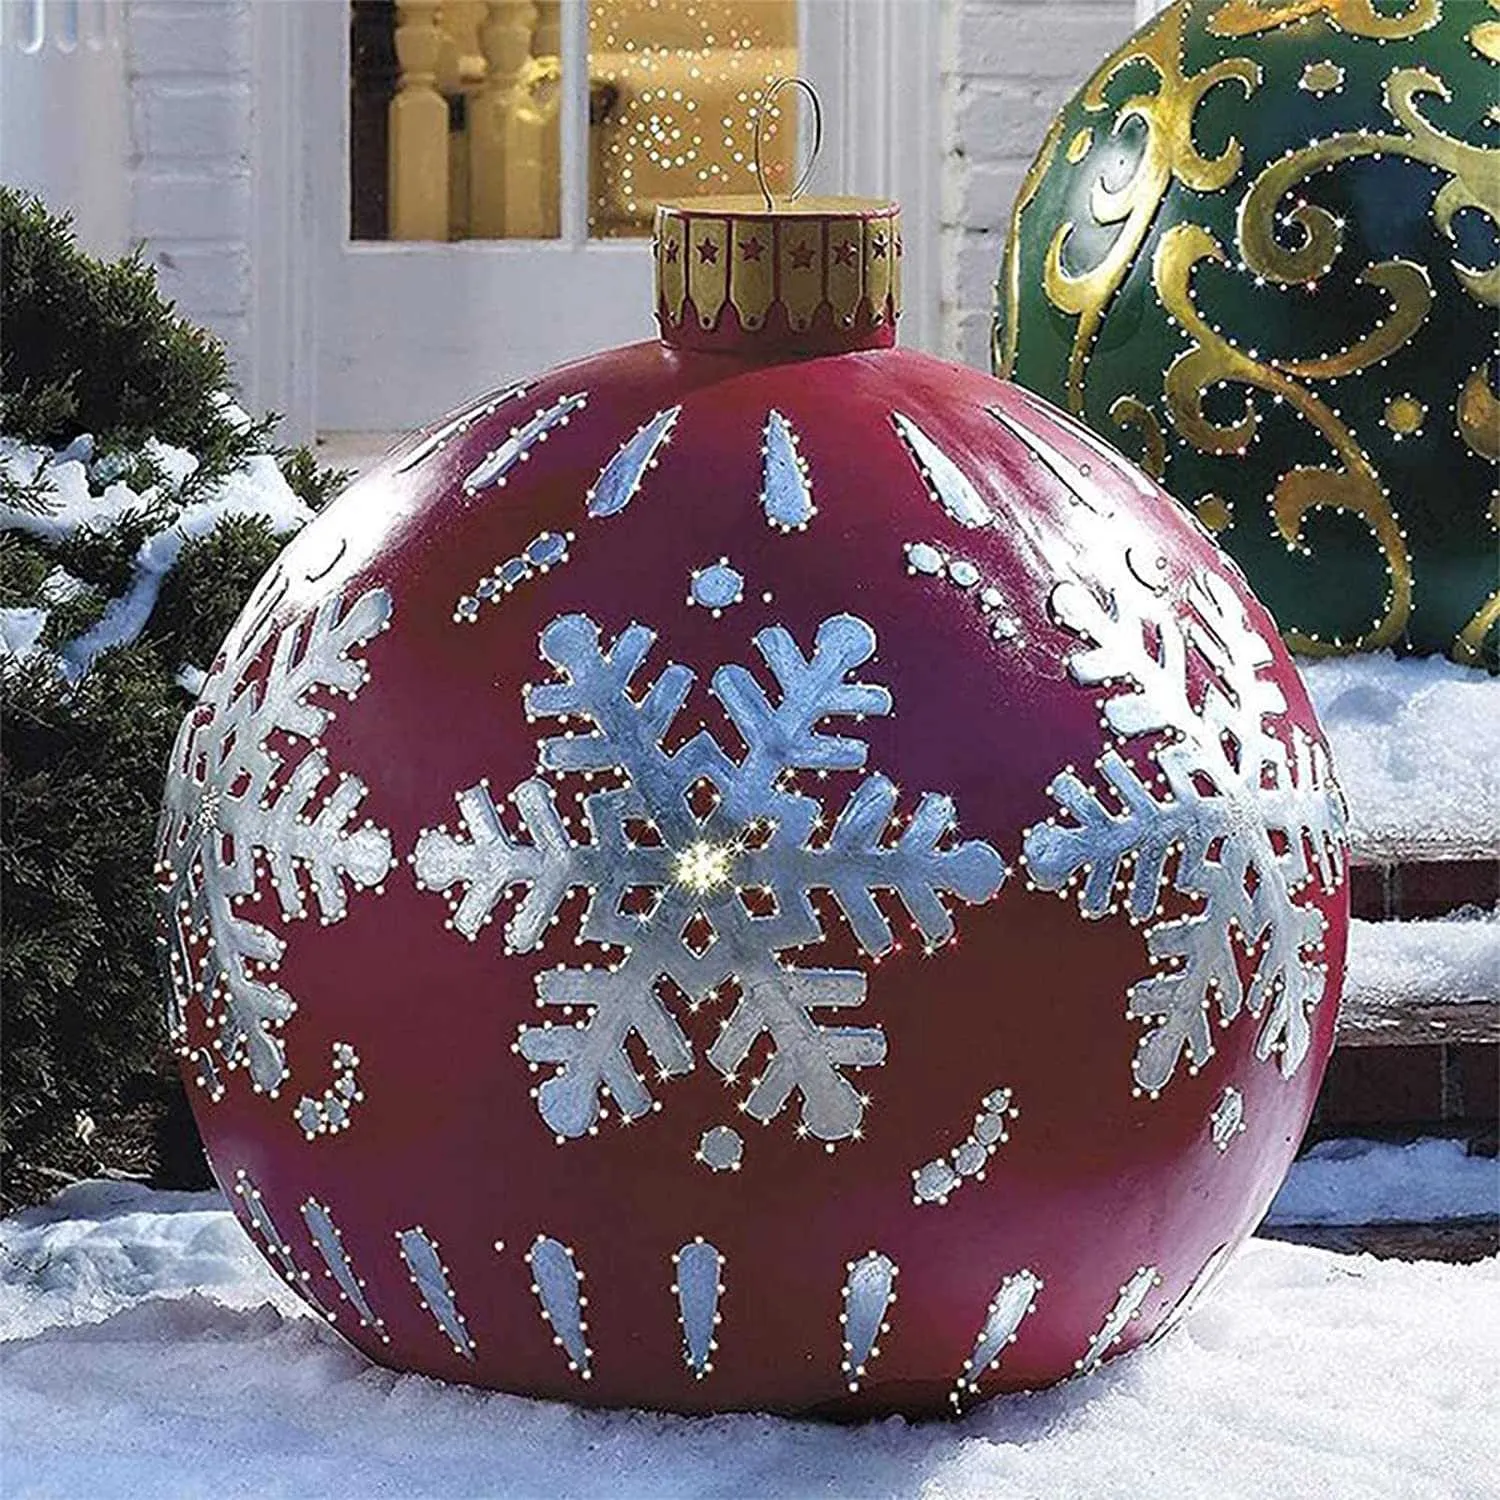 PVCで作られた屋外クリスマスインフレータブル装飾ボール23 6インチジャイアントツリーデコレーションホリデー装飾211018327U